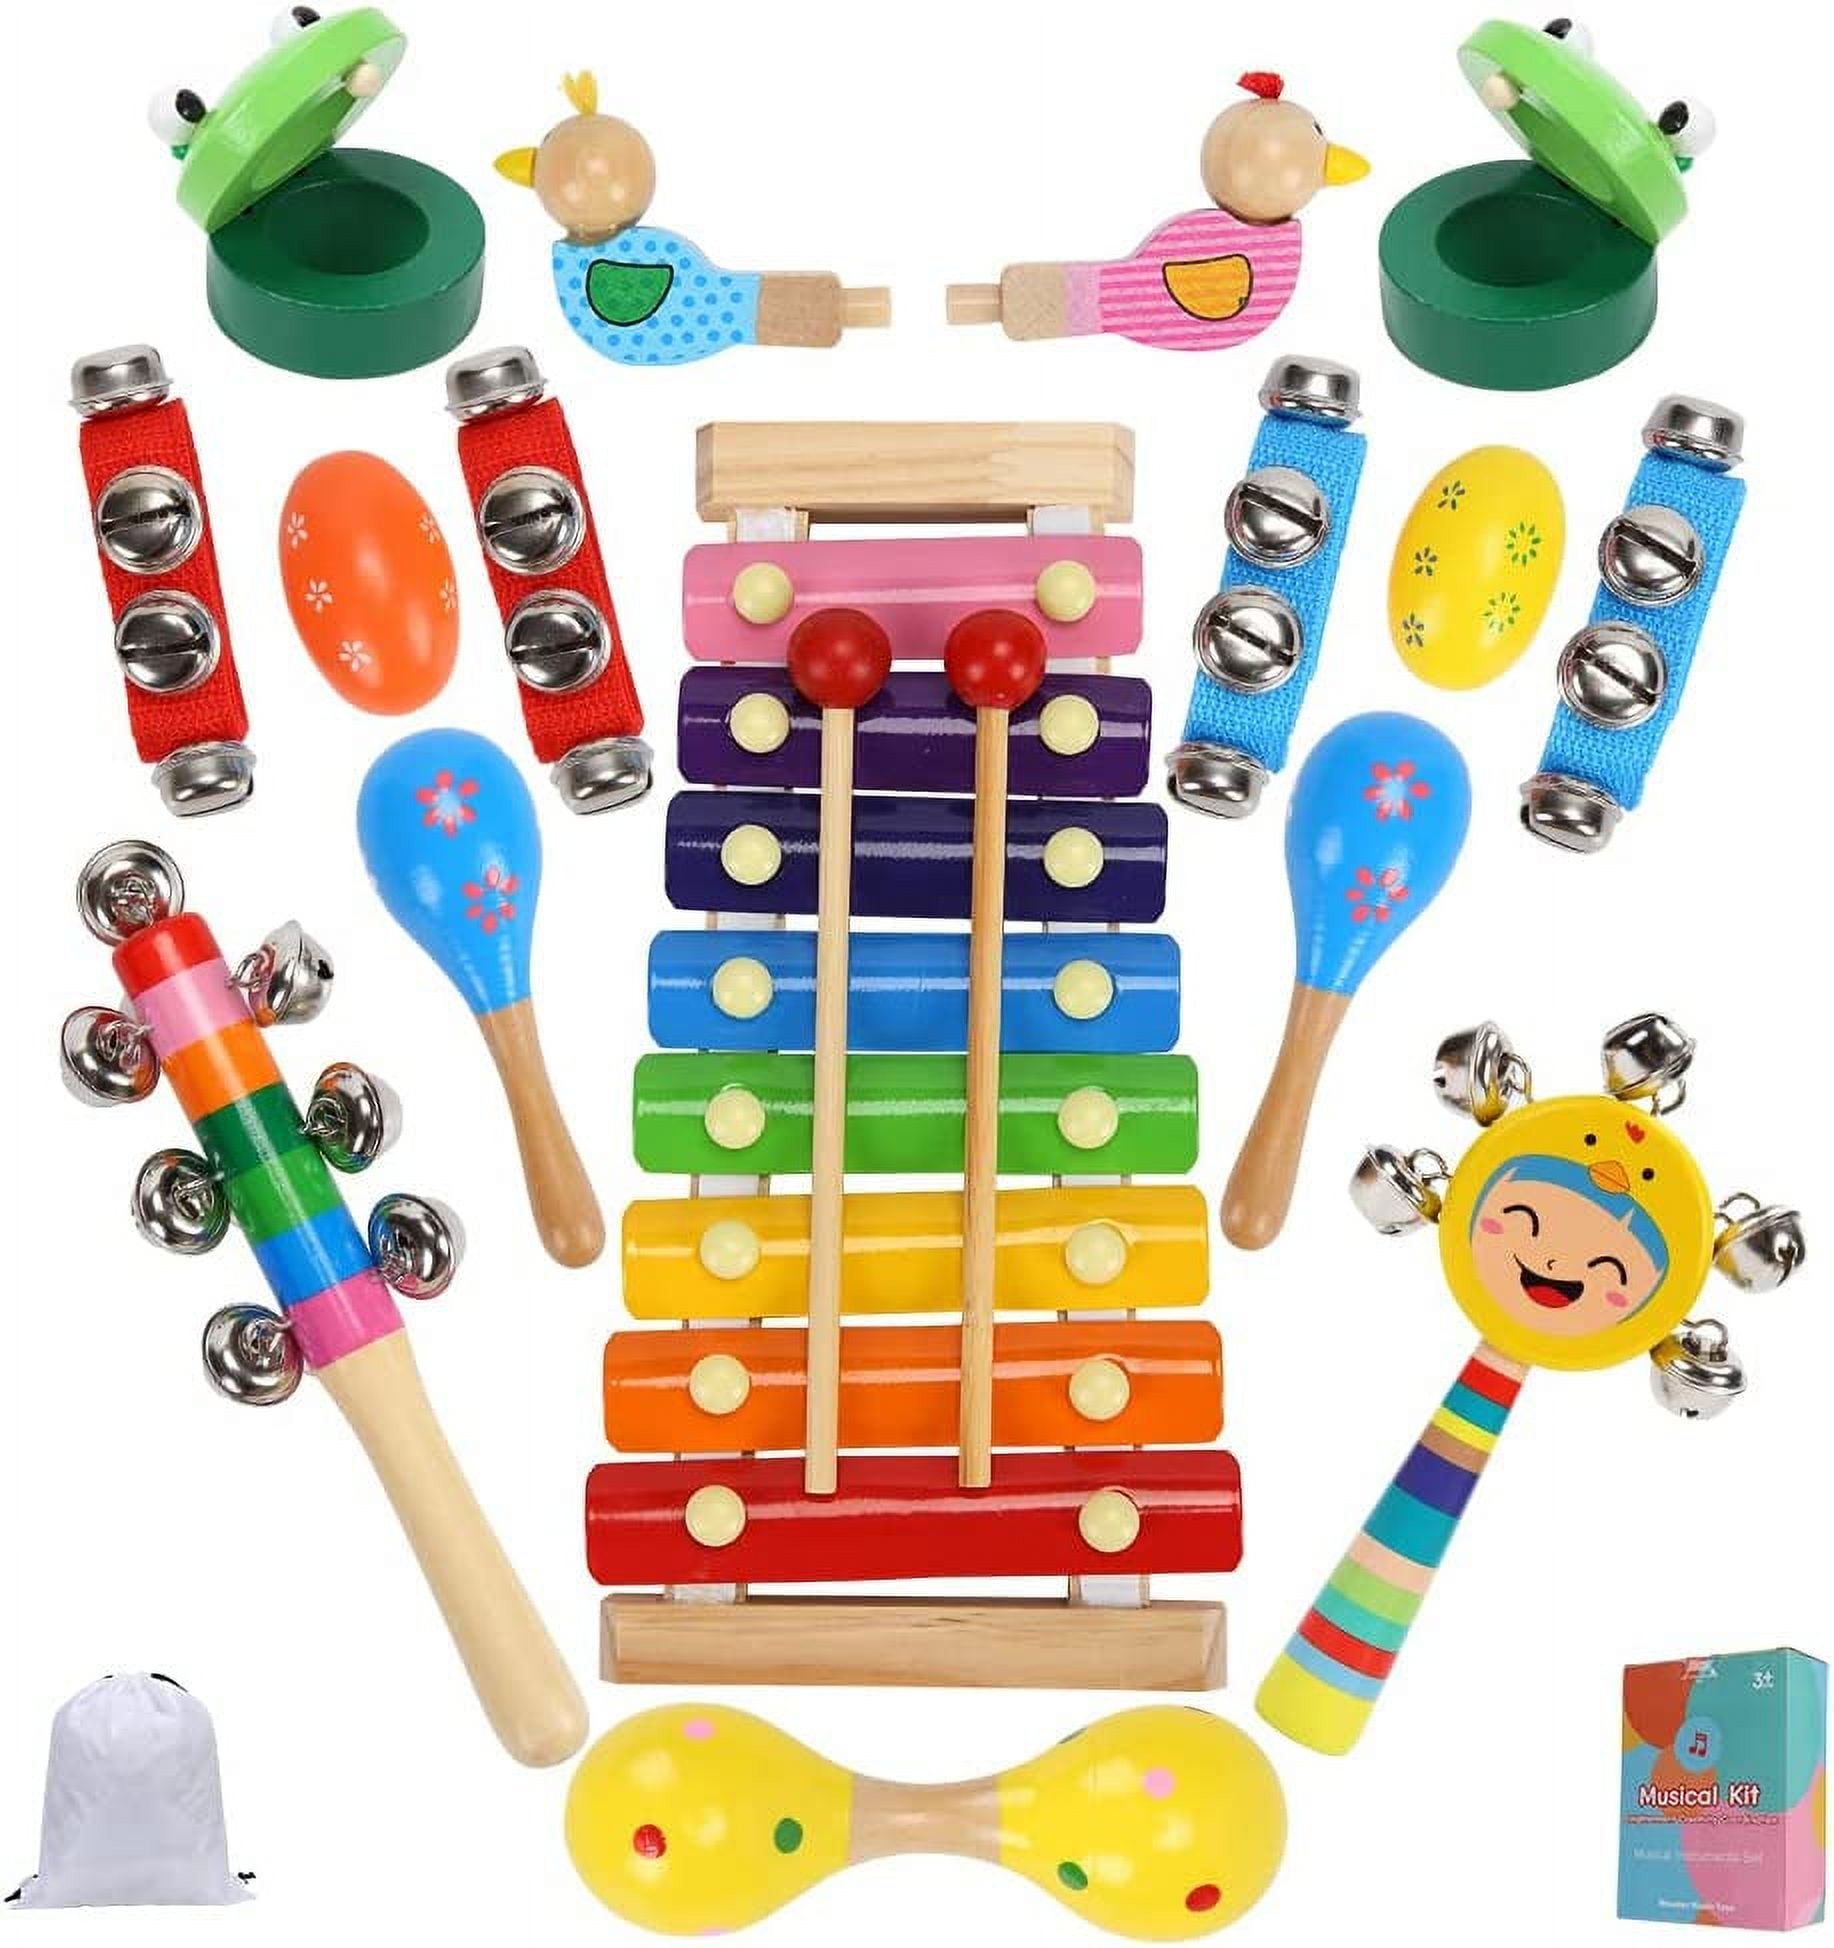 Kids Toys Dj Mixer Dj Turntable Music Mixer Musical Instrument Gift Kids Dj  Mixer Party Toy Musical Toys For Girls Boys Children - Toy Musical  Instrument - AliExpress